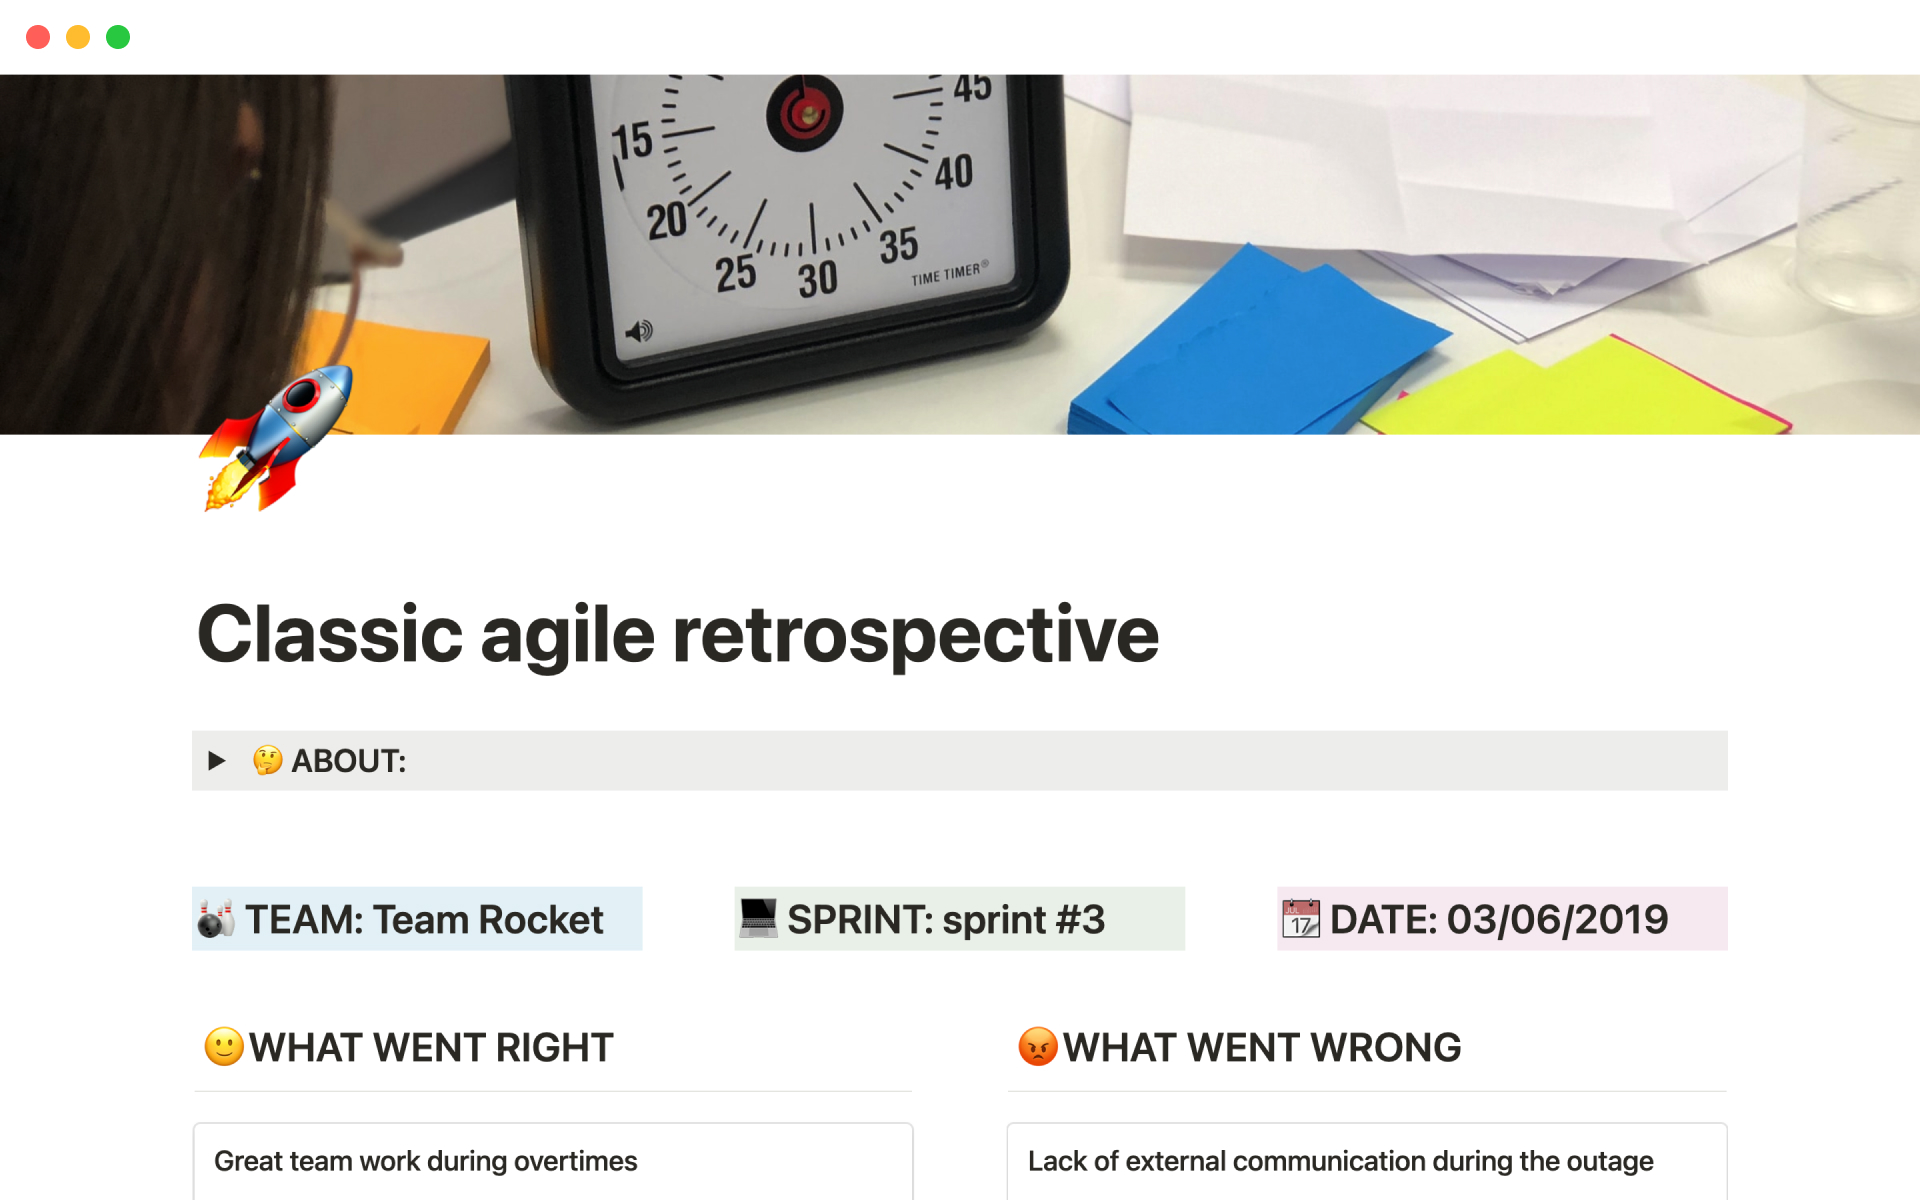 A retrospective template for your agile team.
